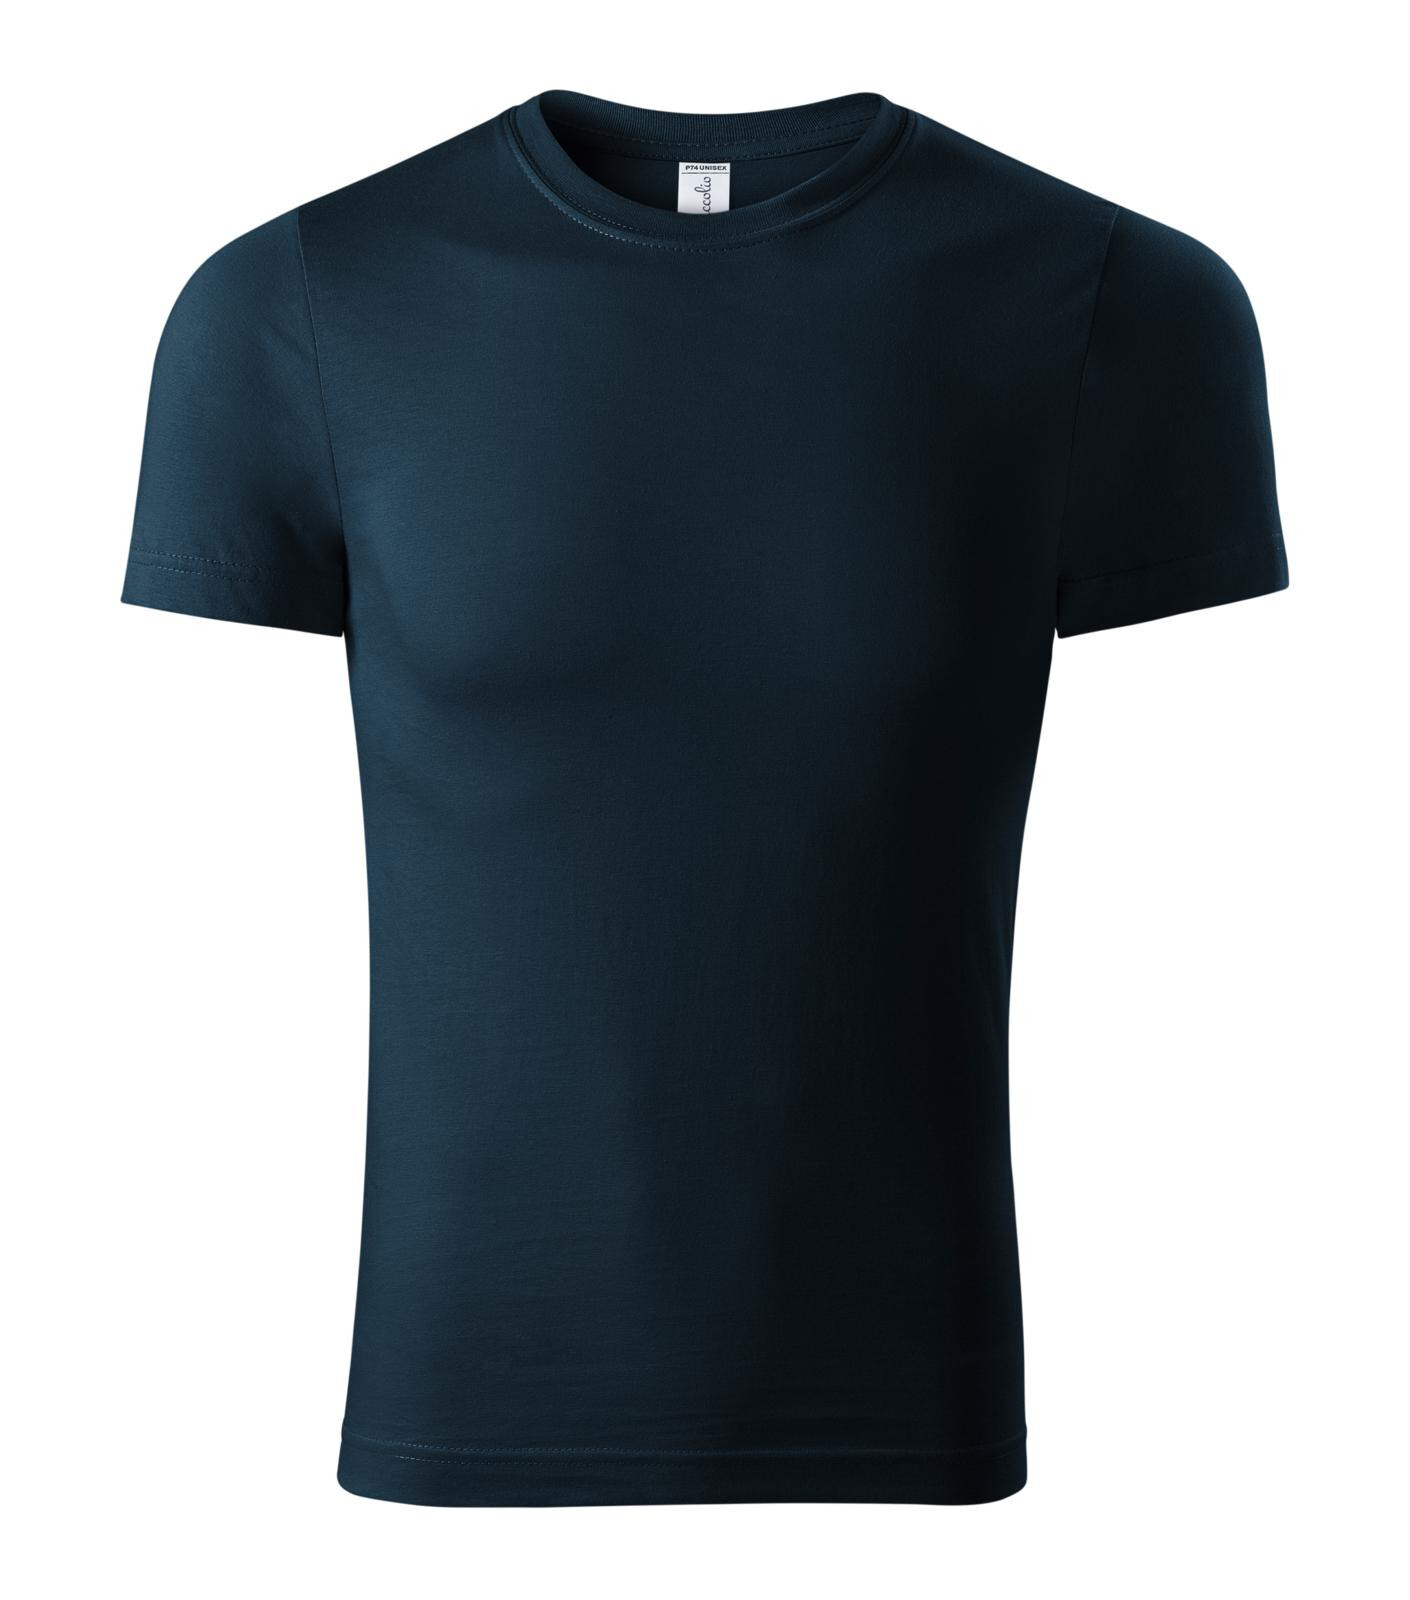 Unisex bavlnené tričko Piccolio Peak P74 - veľkosť: XS, farba: tmavo modrá